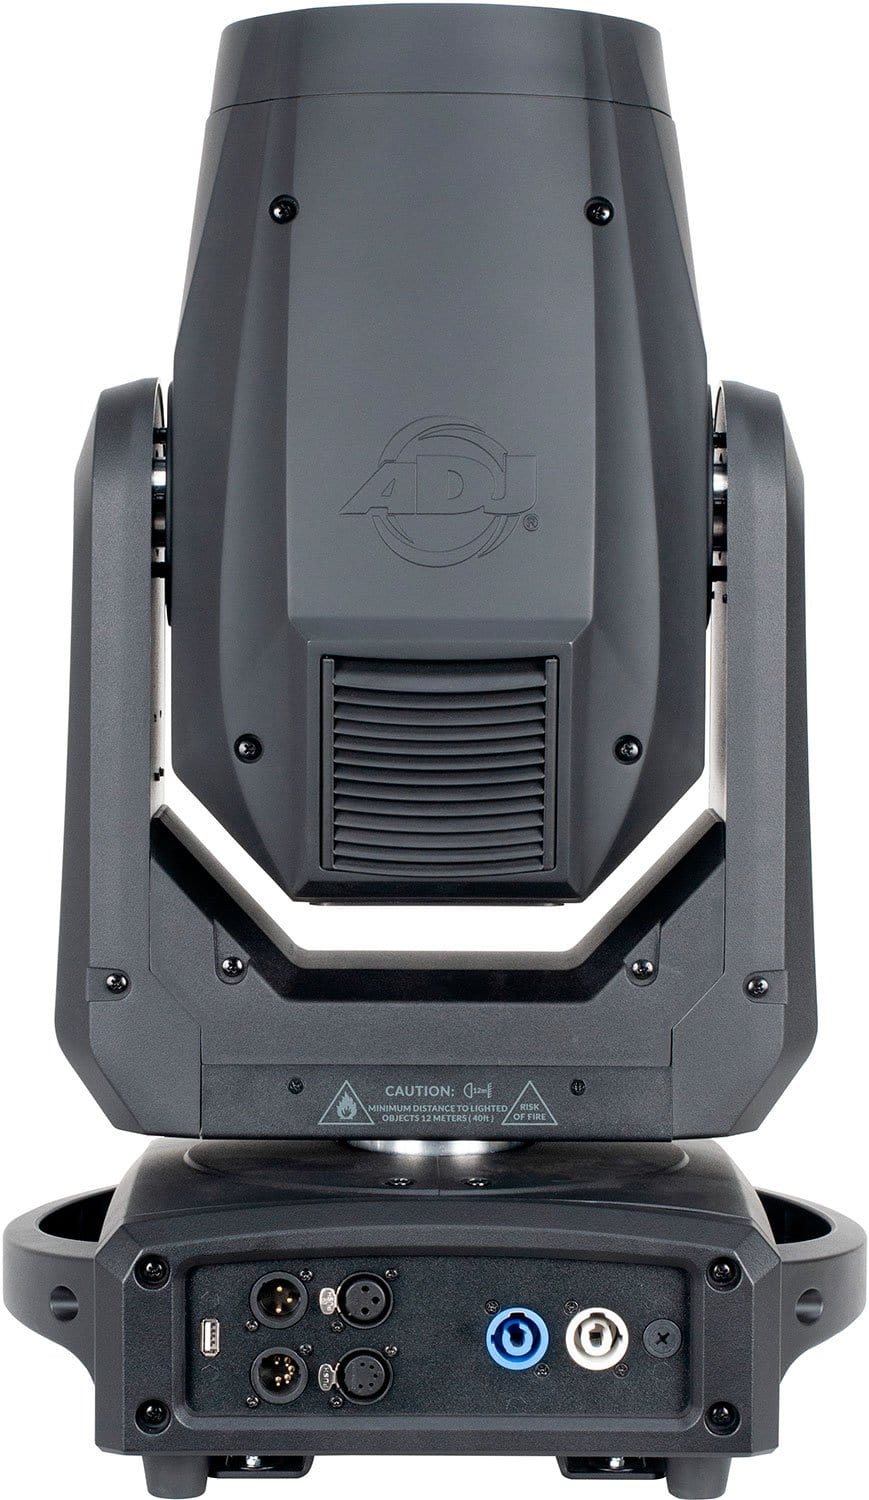 ADJ Vizi Beam 12RX High Powered Beam Moving Head - PSSL ProSound and Stage Lighting